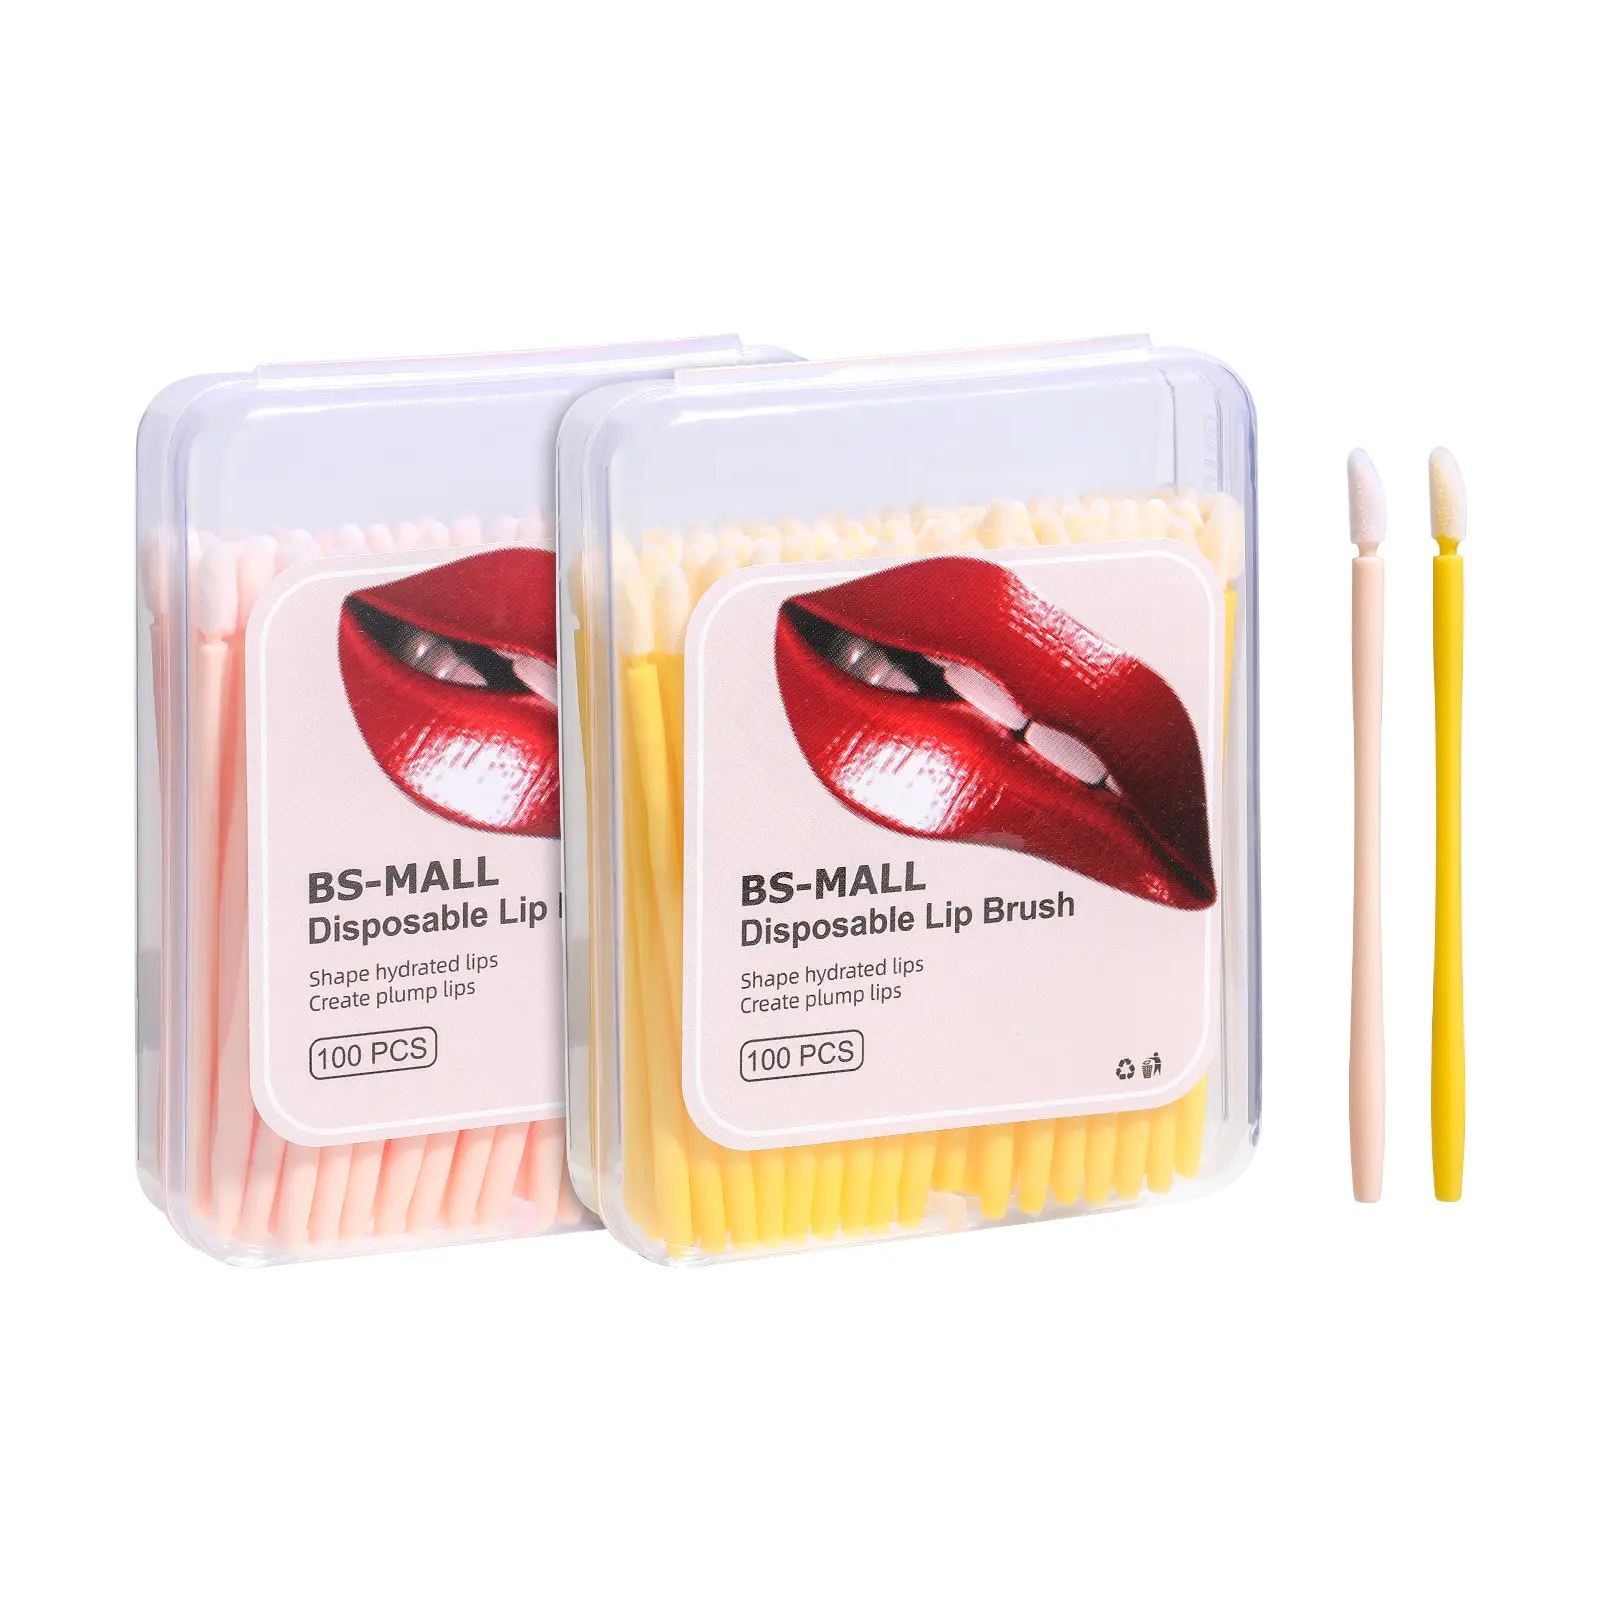 BS-MALL 100PCS Disposable Lip brush Make Up Brush Lipstick Lip Gloss Wands Applicator Tool